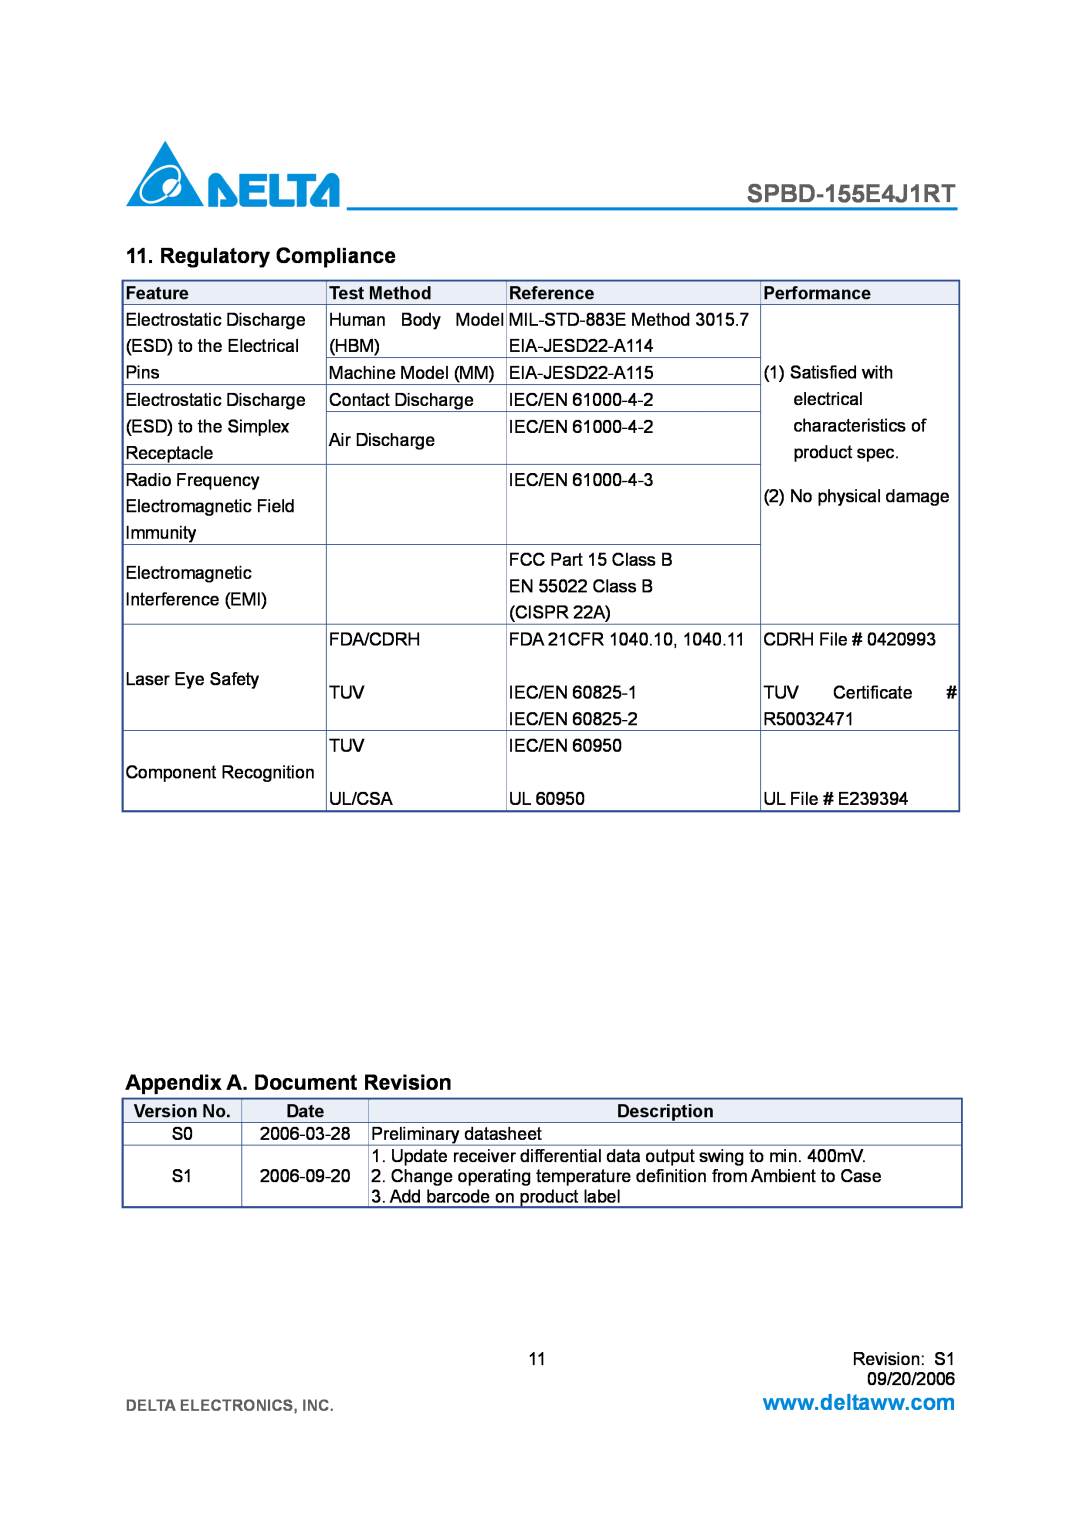 Delta Electronics SPBD-155E4J1RT Regulatory Compliance, Appendix A. Document Revision, Feature, Test Method, Reference 